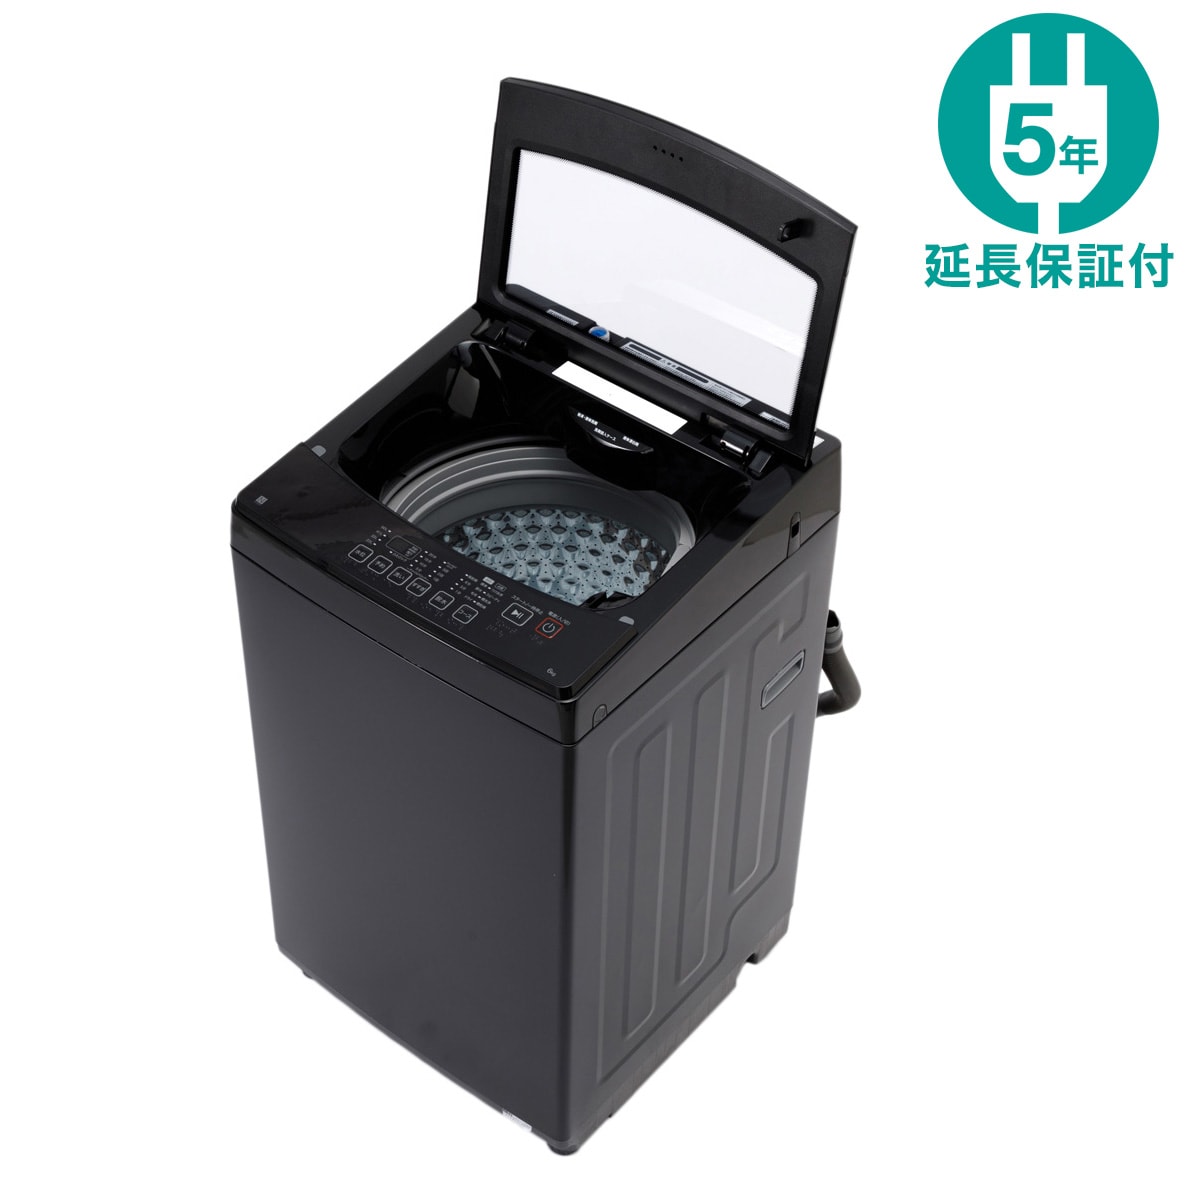 6kg全自動洗濯機(NT60L1 ブラック) 延長保証付き通販 | ニトリネット 